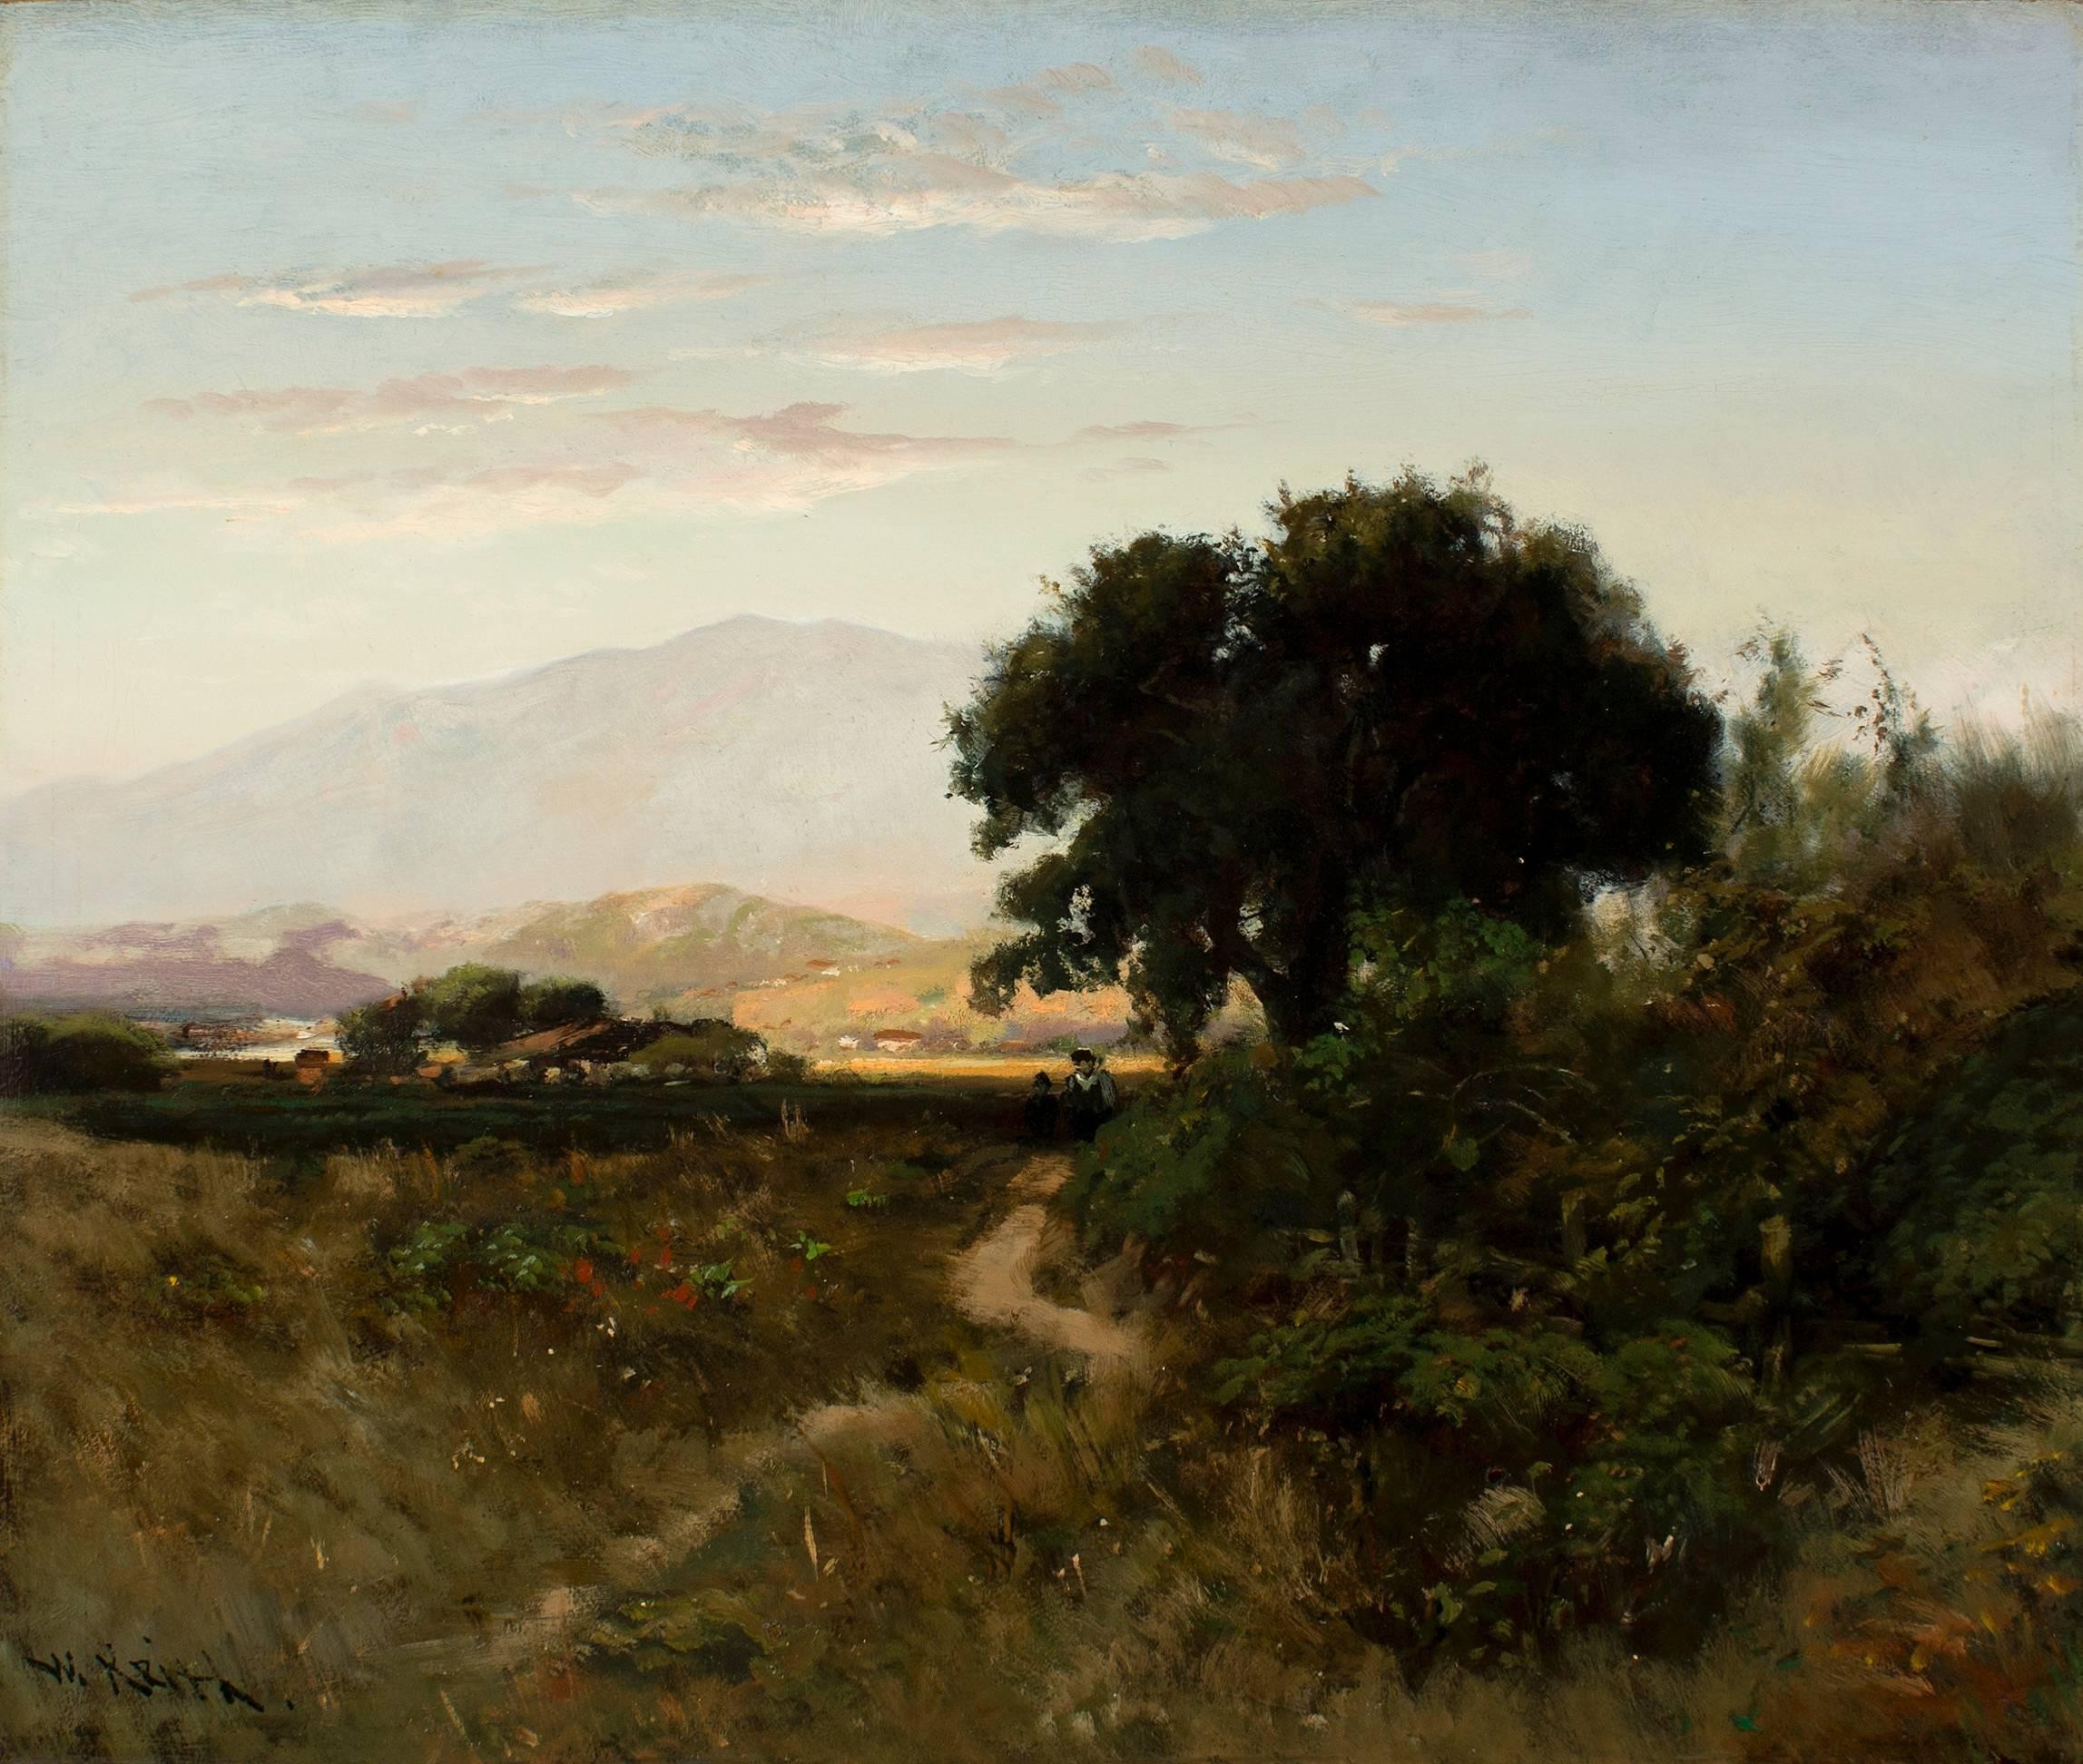 Mount Tamalpais, comté de Marin, Californie, - Painting de William Keith